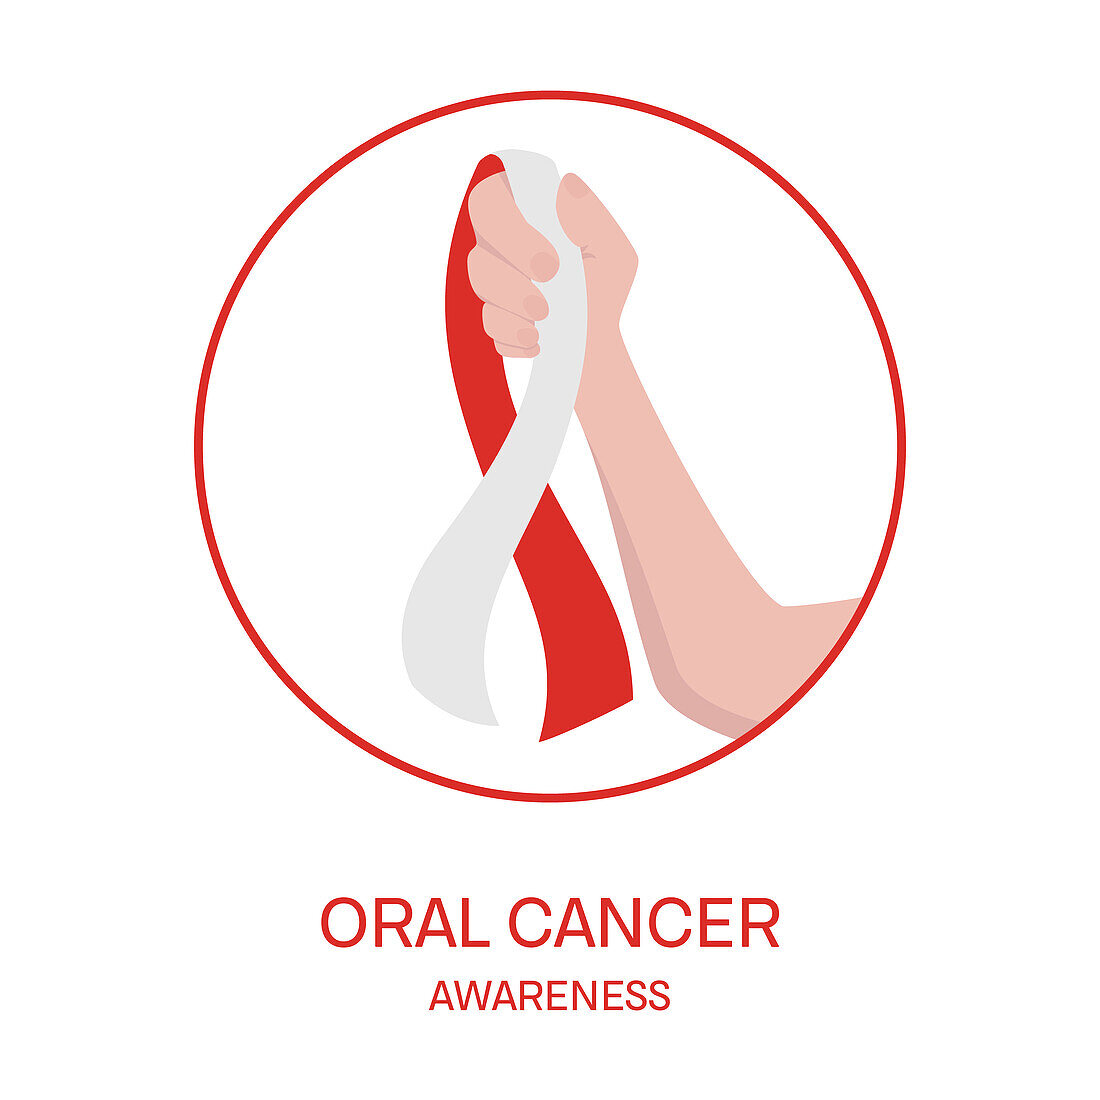 Oral cancer awareness ribbon, conceptual illustration